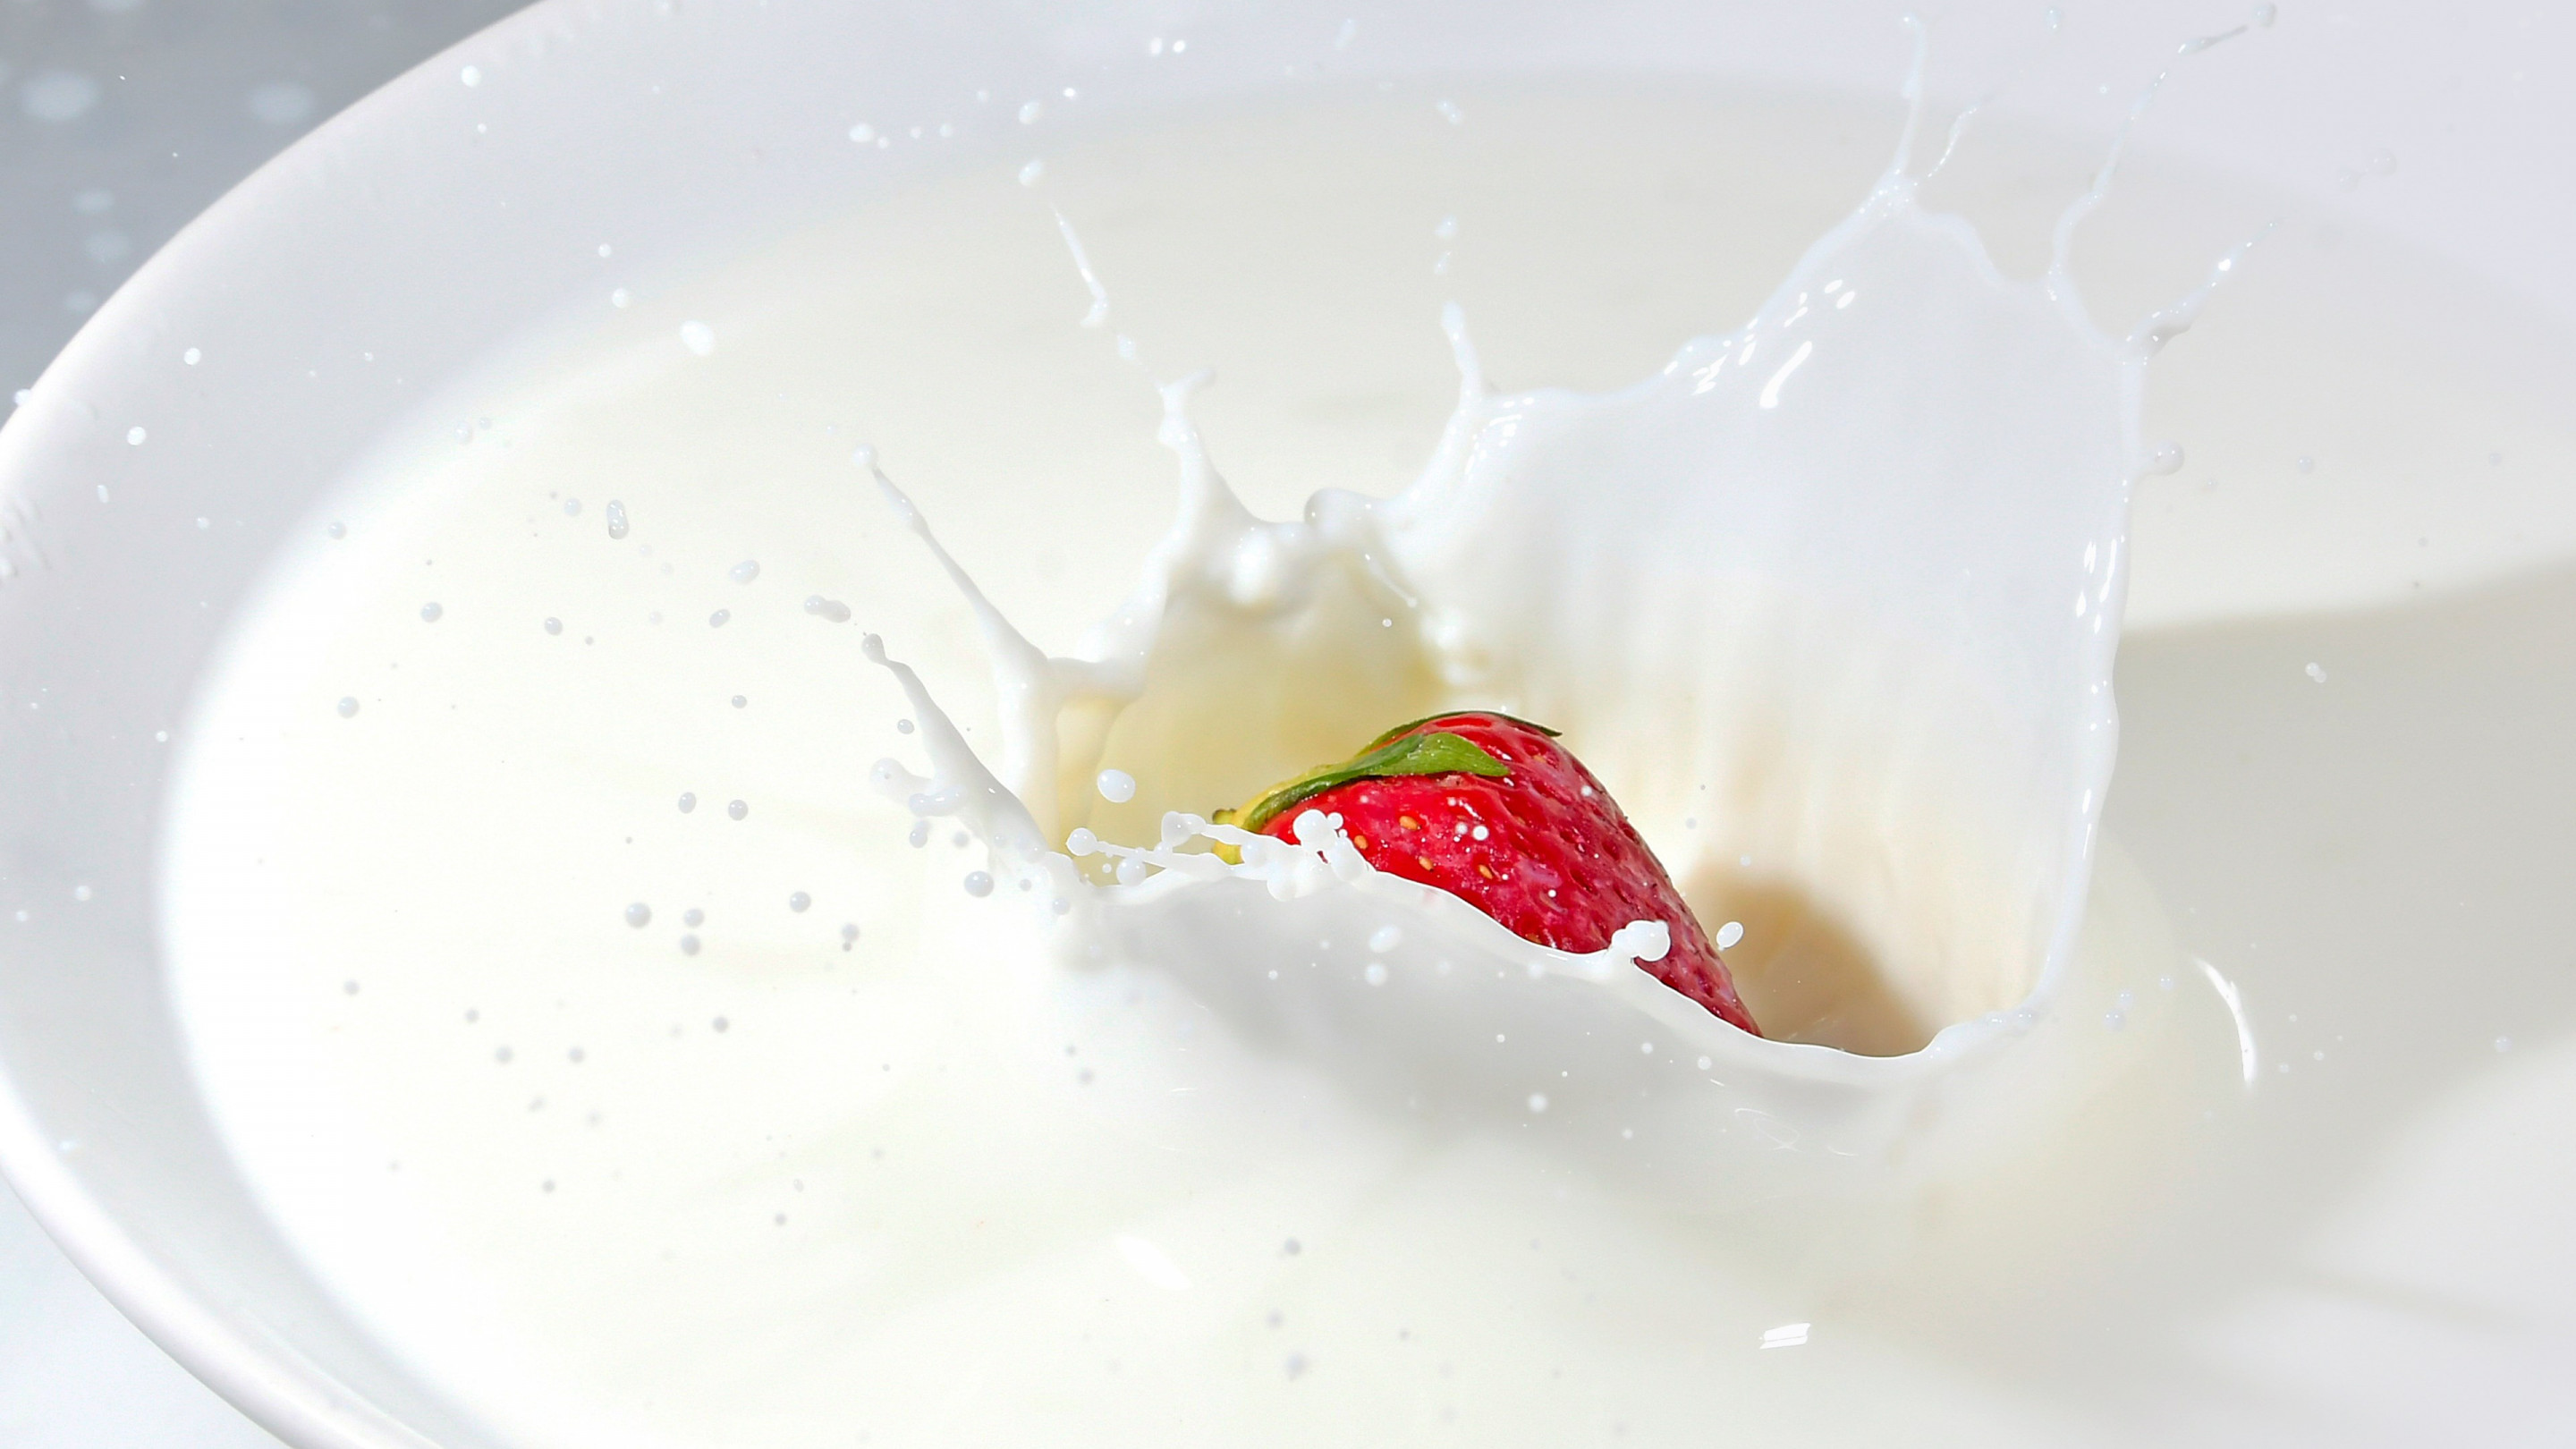 Strawberry splashing in milk wallpaper 2880x1620